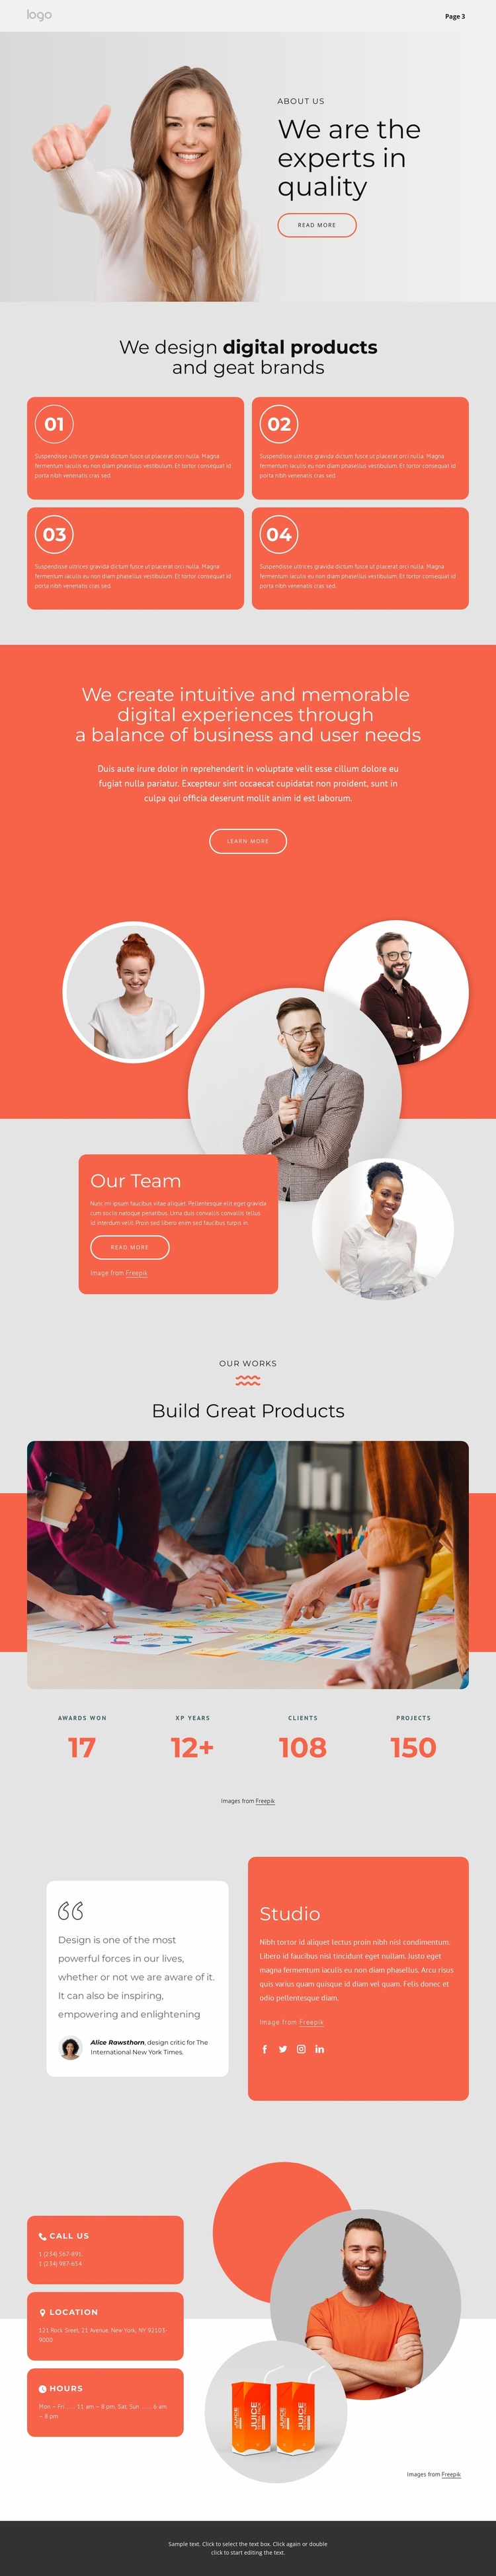 We design great brands Landing Page